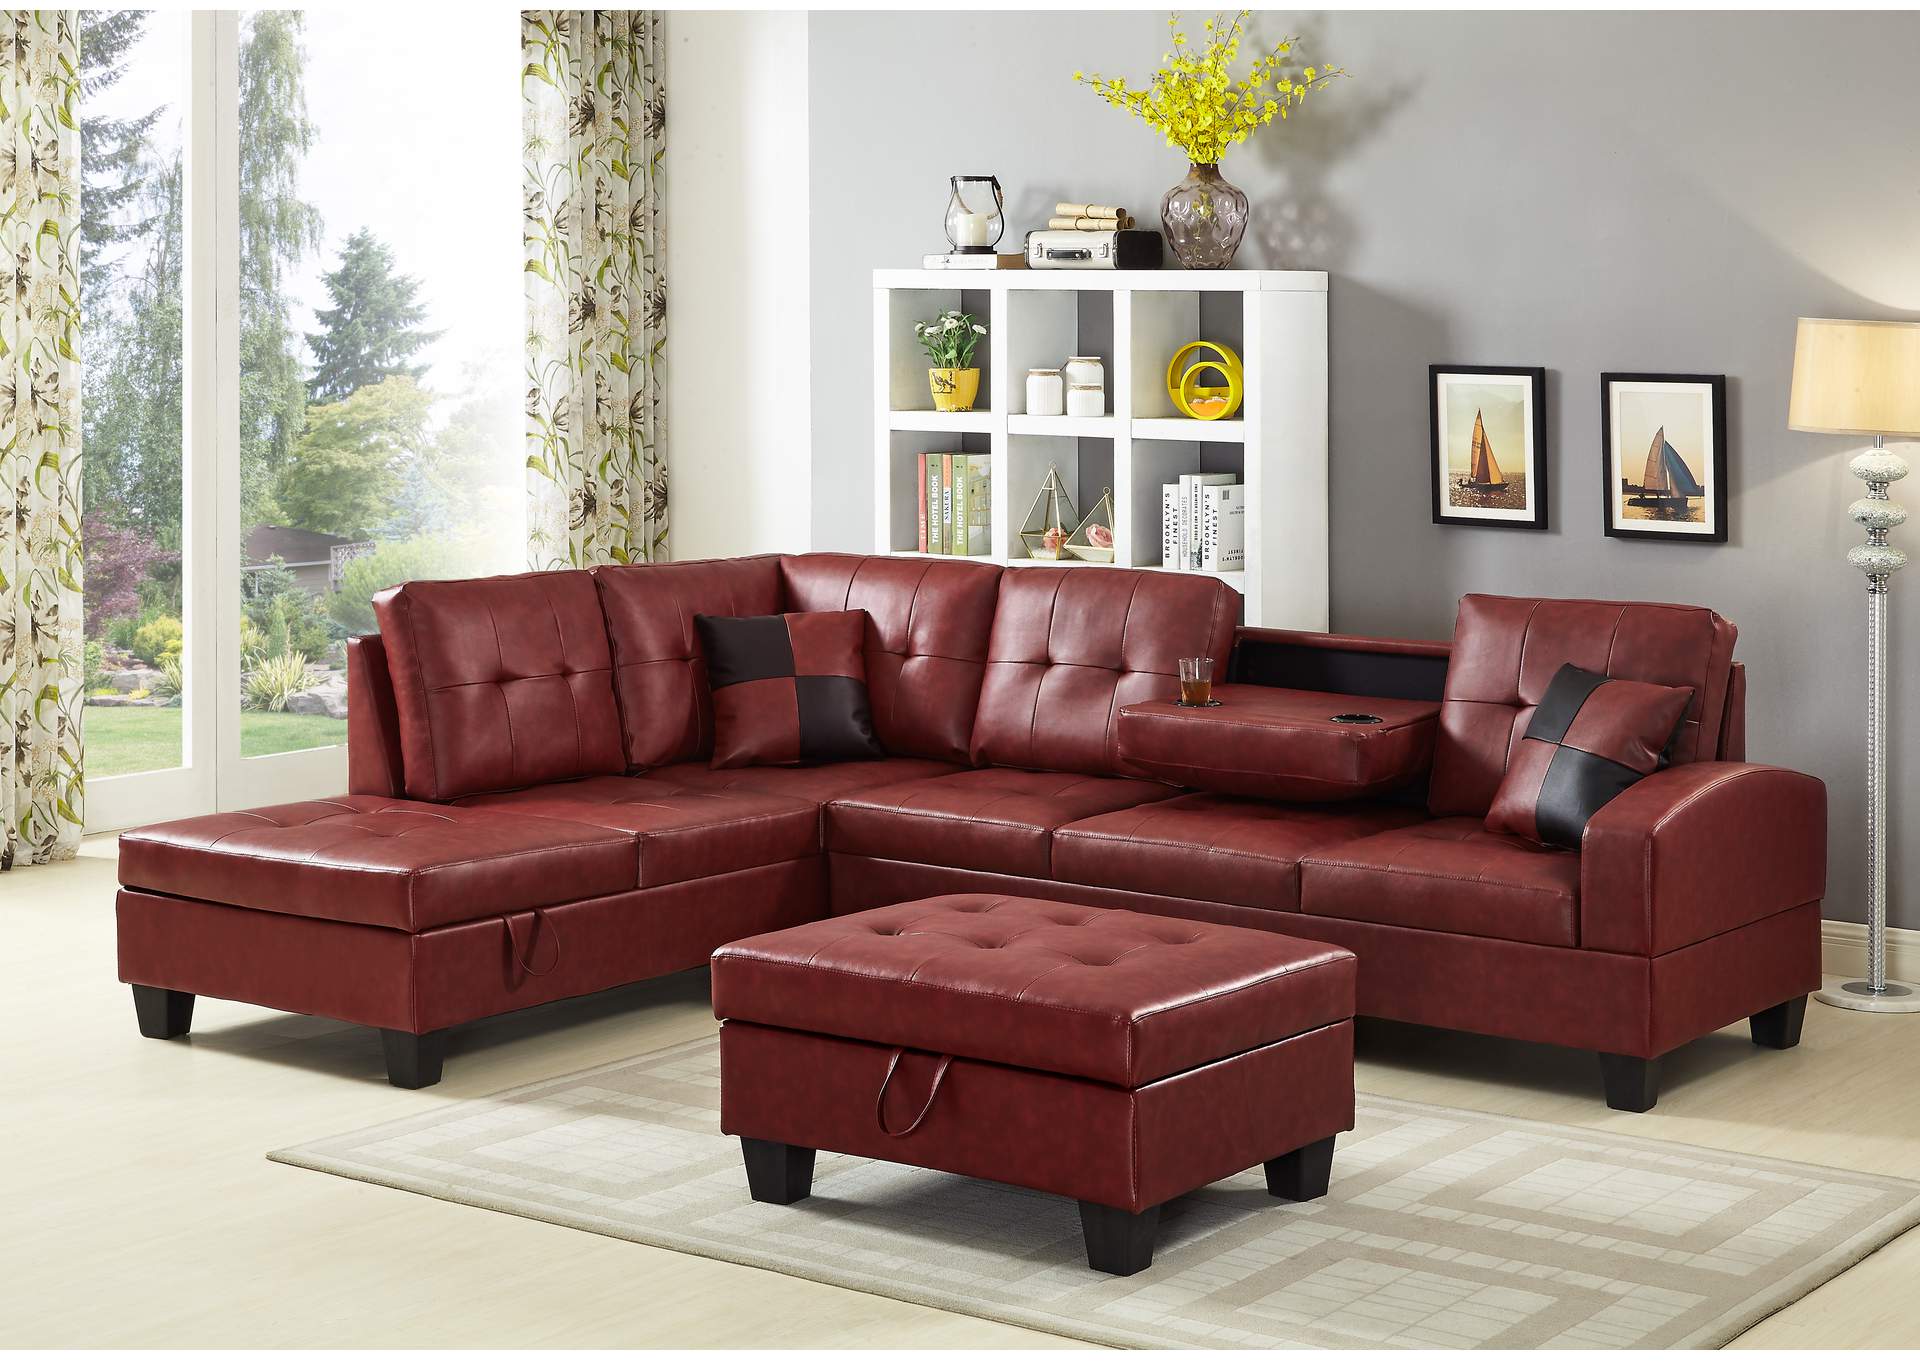 U5700 Red Sectional Sofa,Global Trading